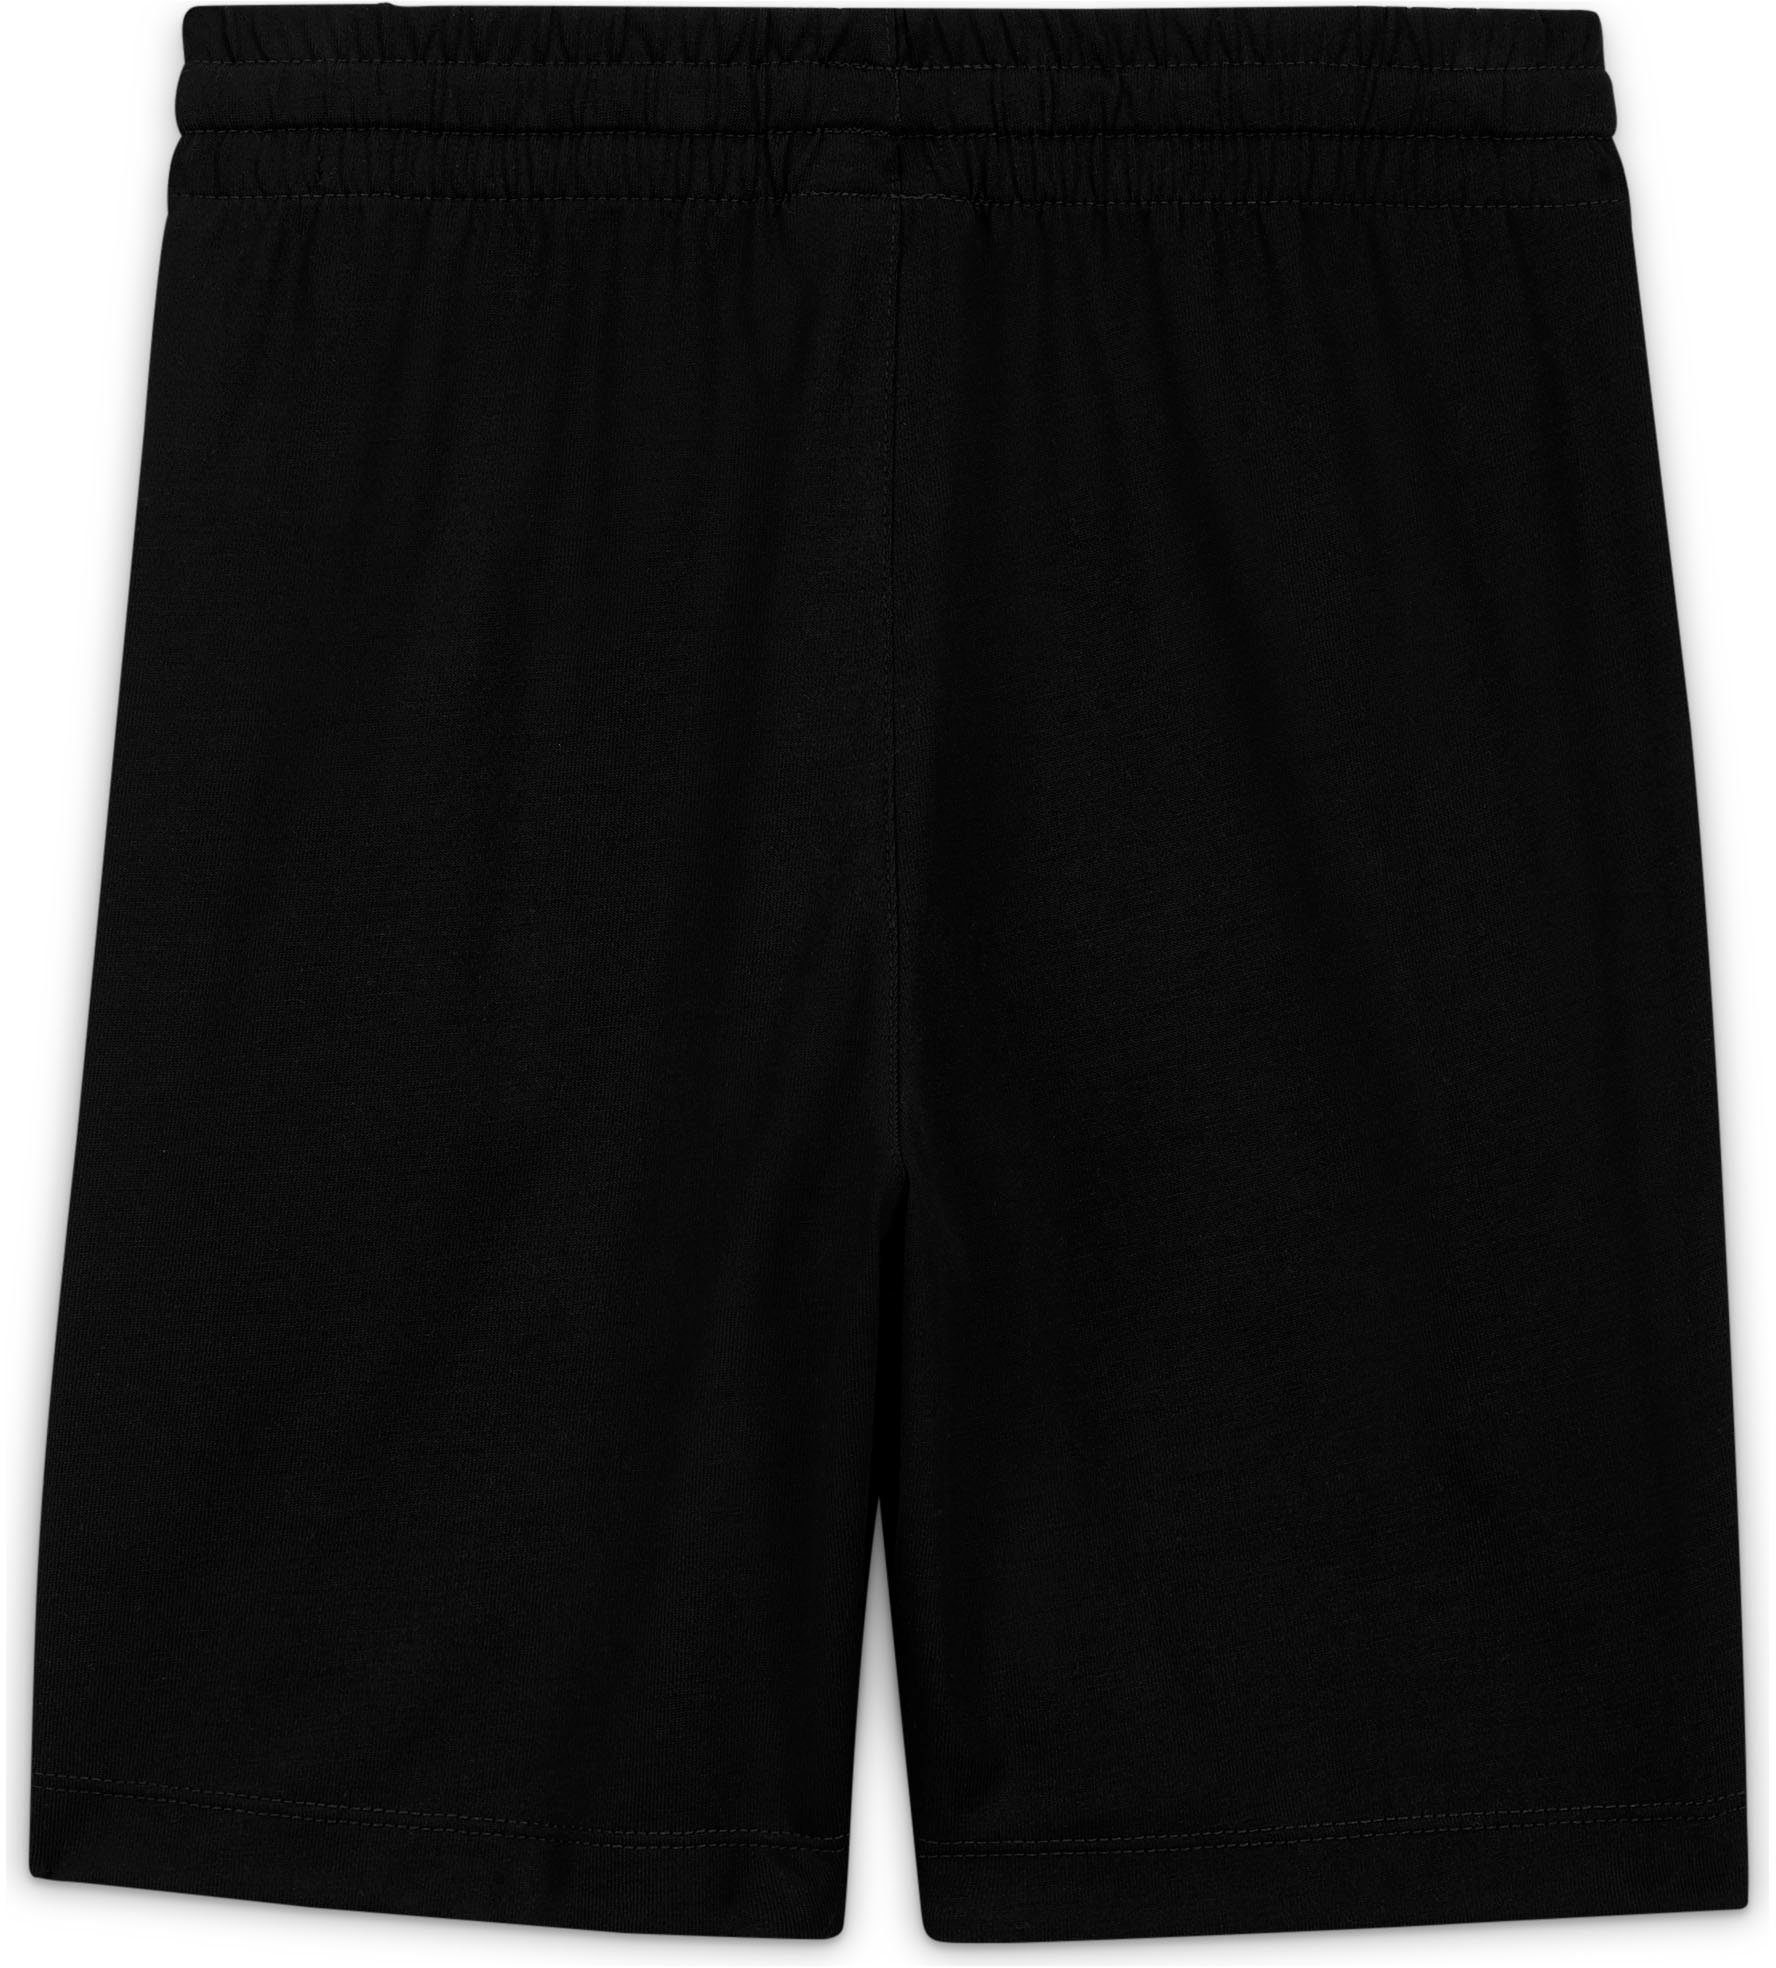 BIG Sportswear (BOYS) Shorts schwarz Nike SHORTS JERSEY KIDS'